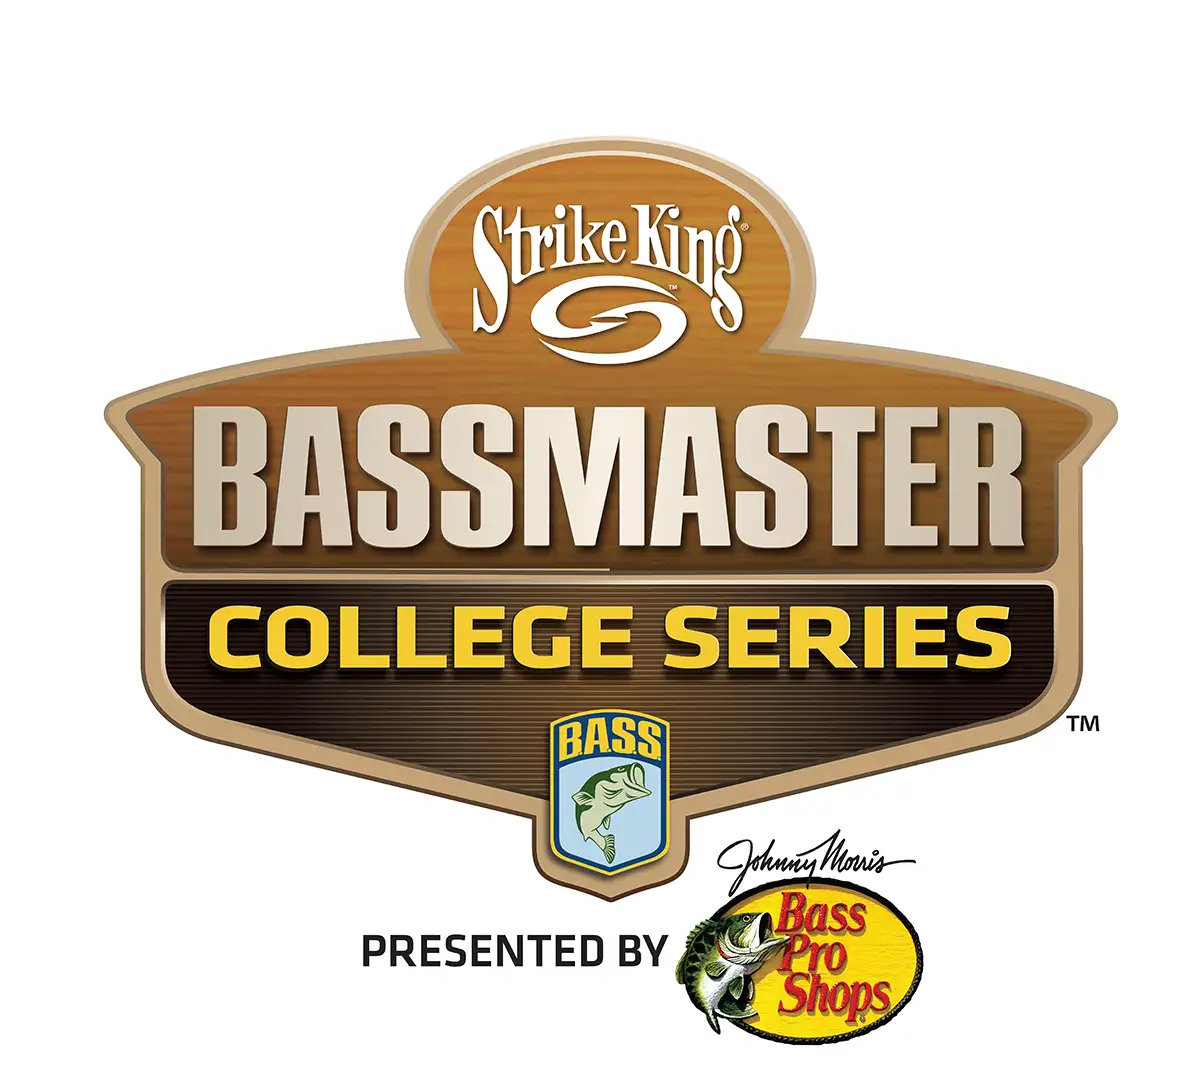 College Bass